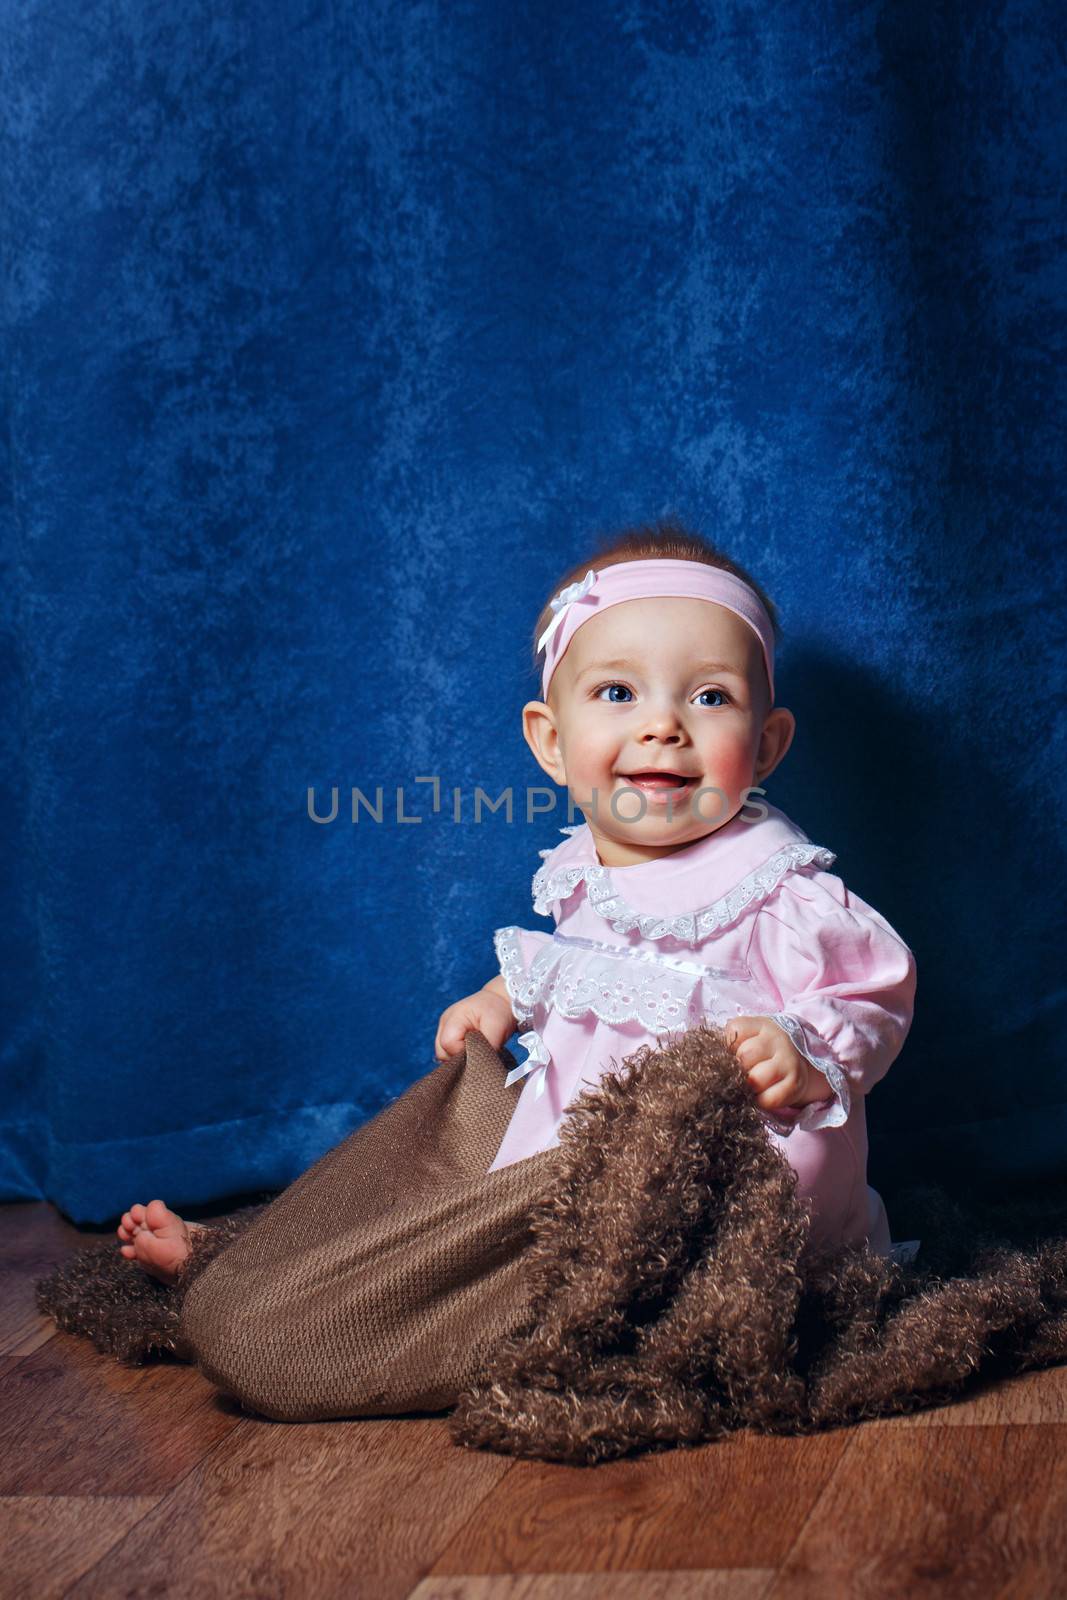 Cute little girl in pink dress by Vagengeym